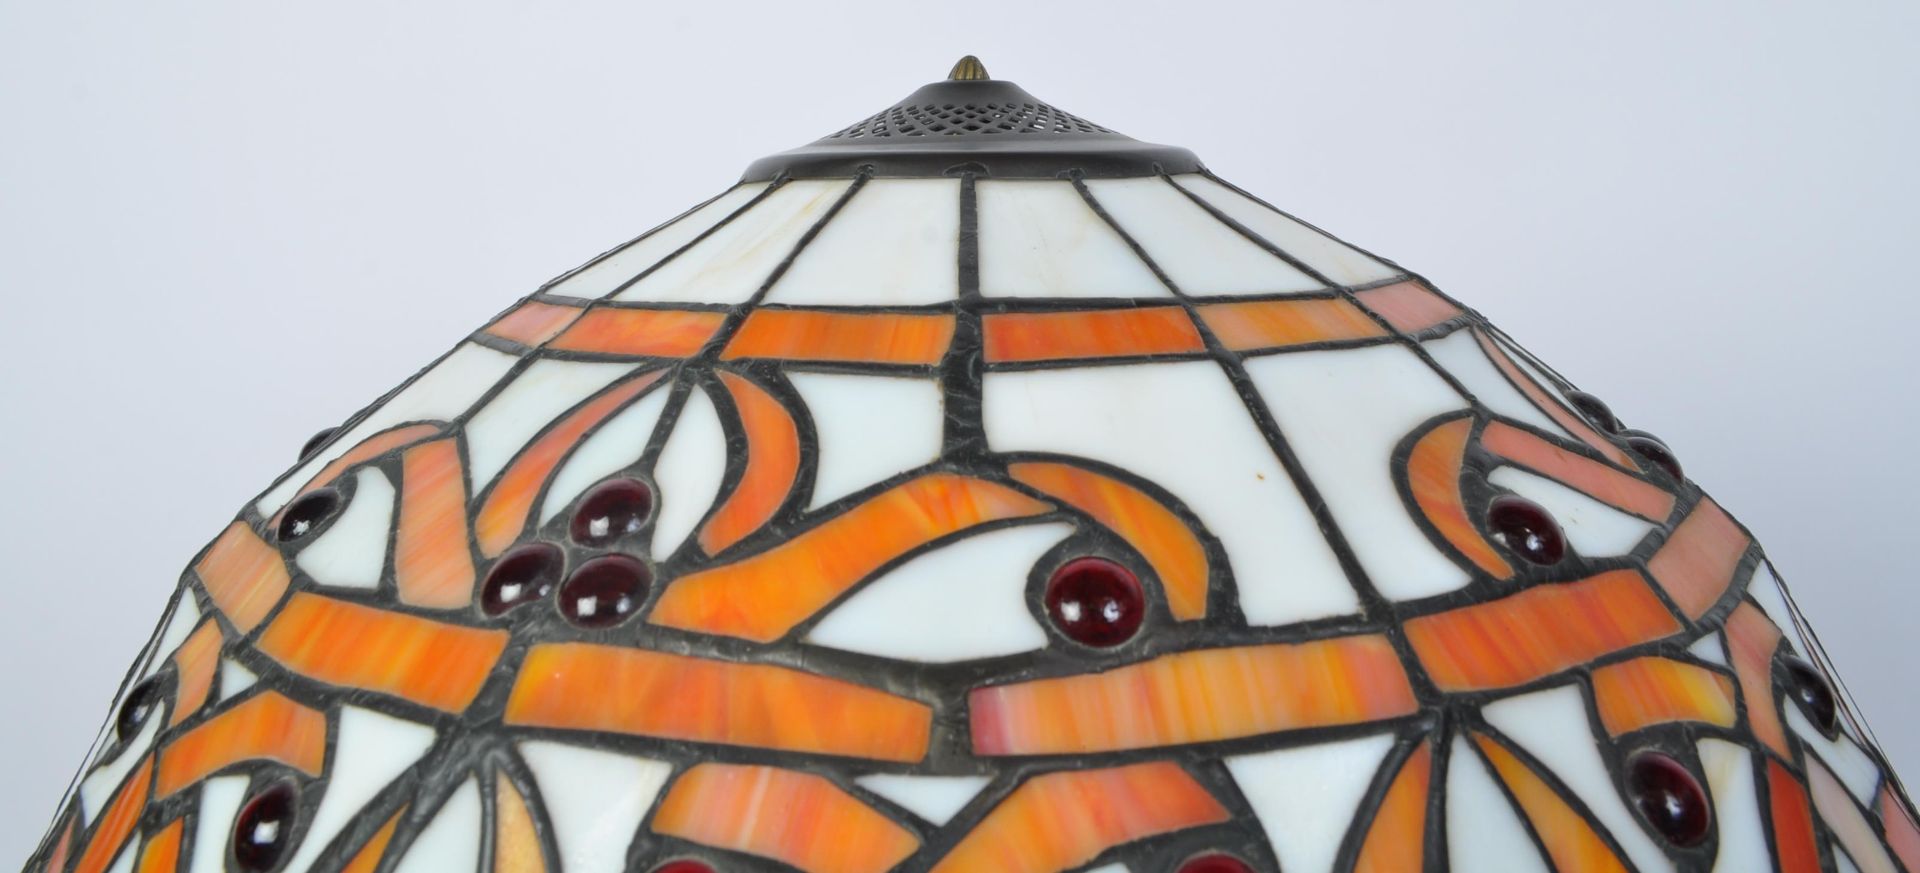 LARGE TIFFANY ART NOUVEAU STYLE TABLE LAMP - Image 5 of 7